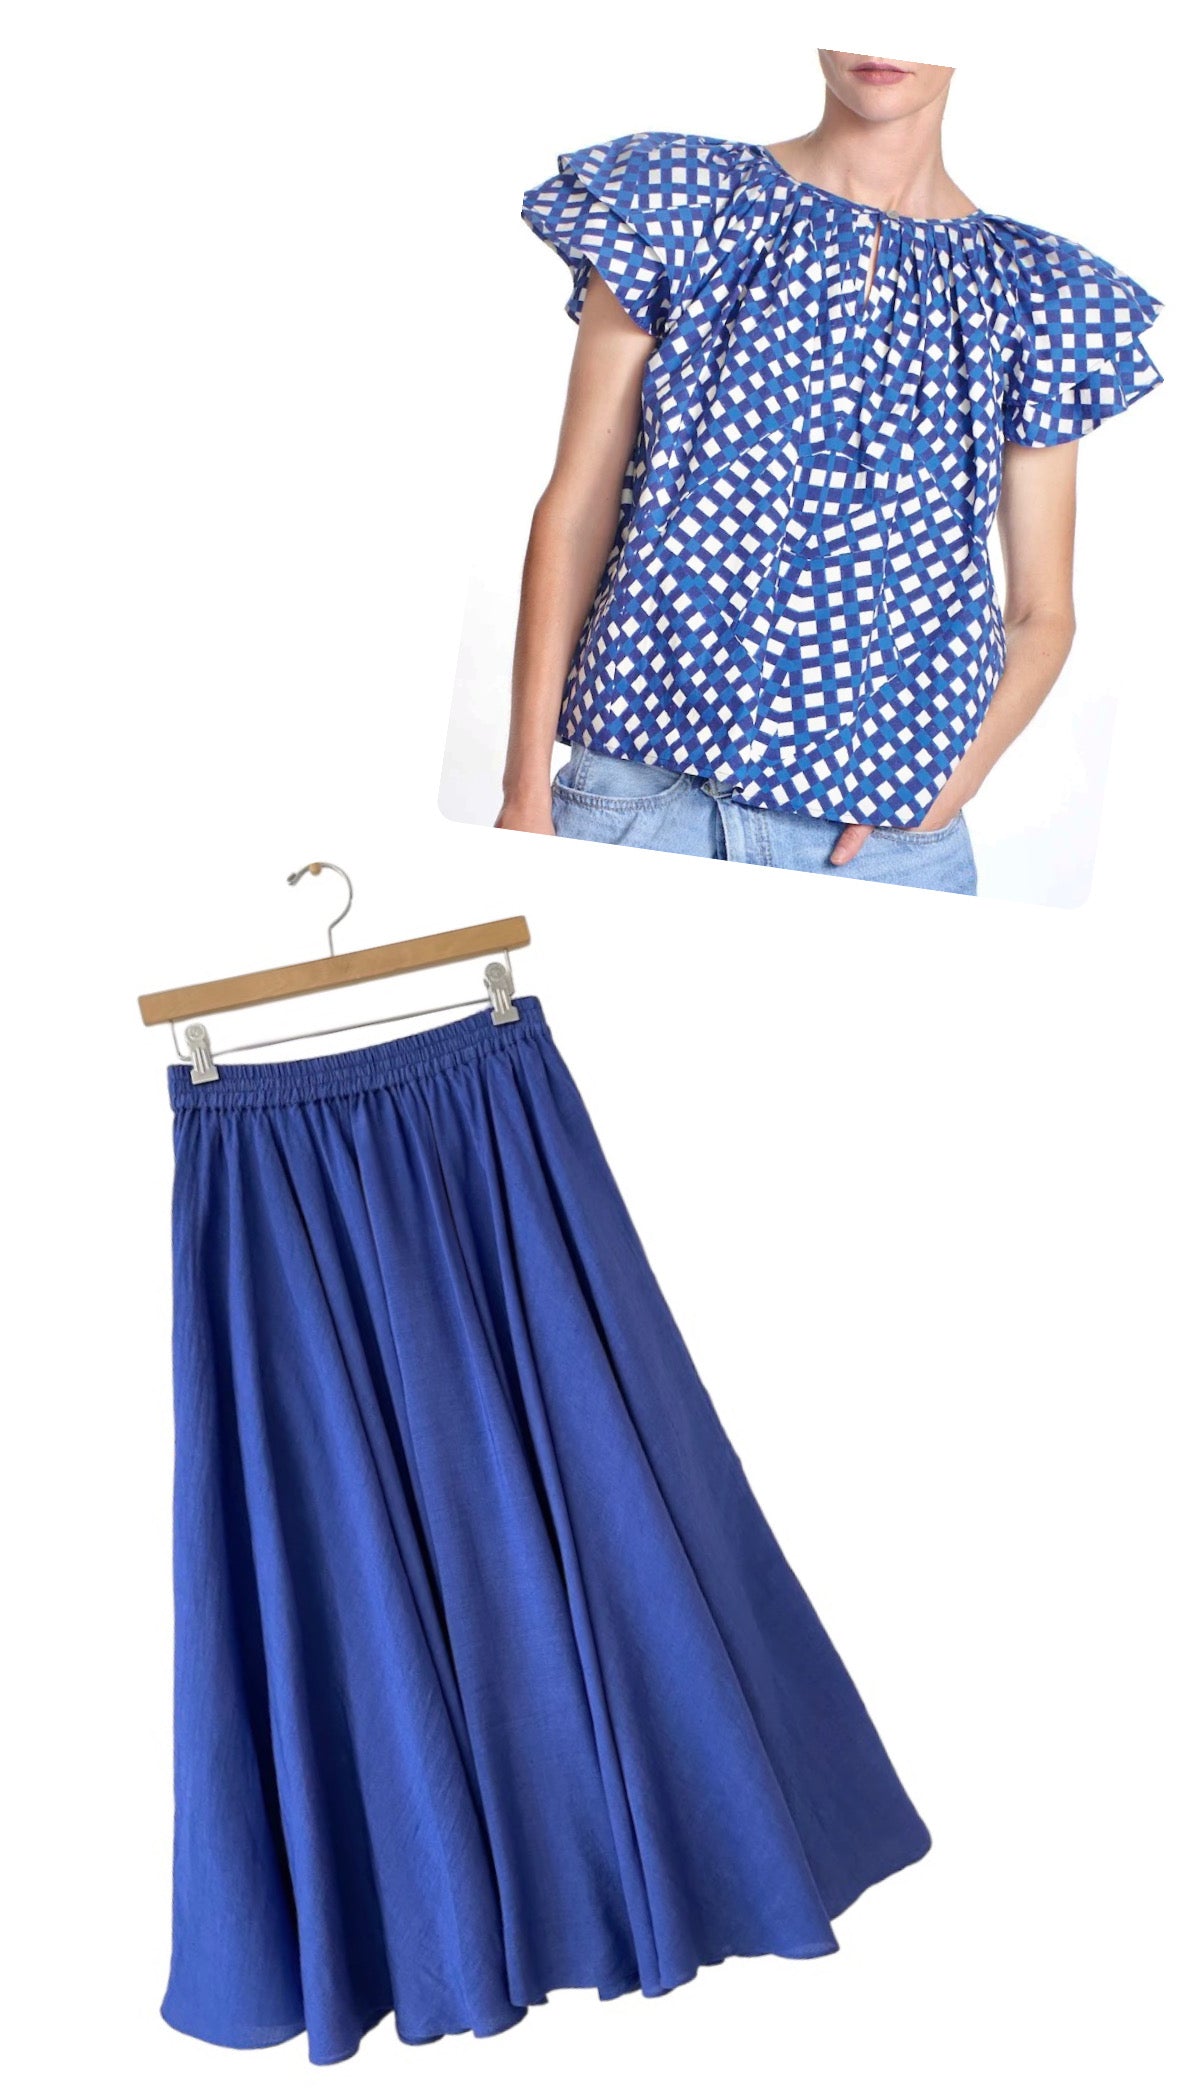 Capri Skirt in cobalt blue by Corey Lynn Calter